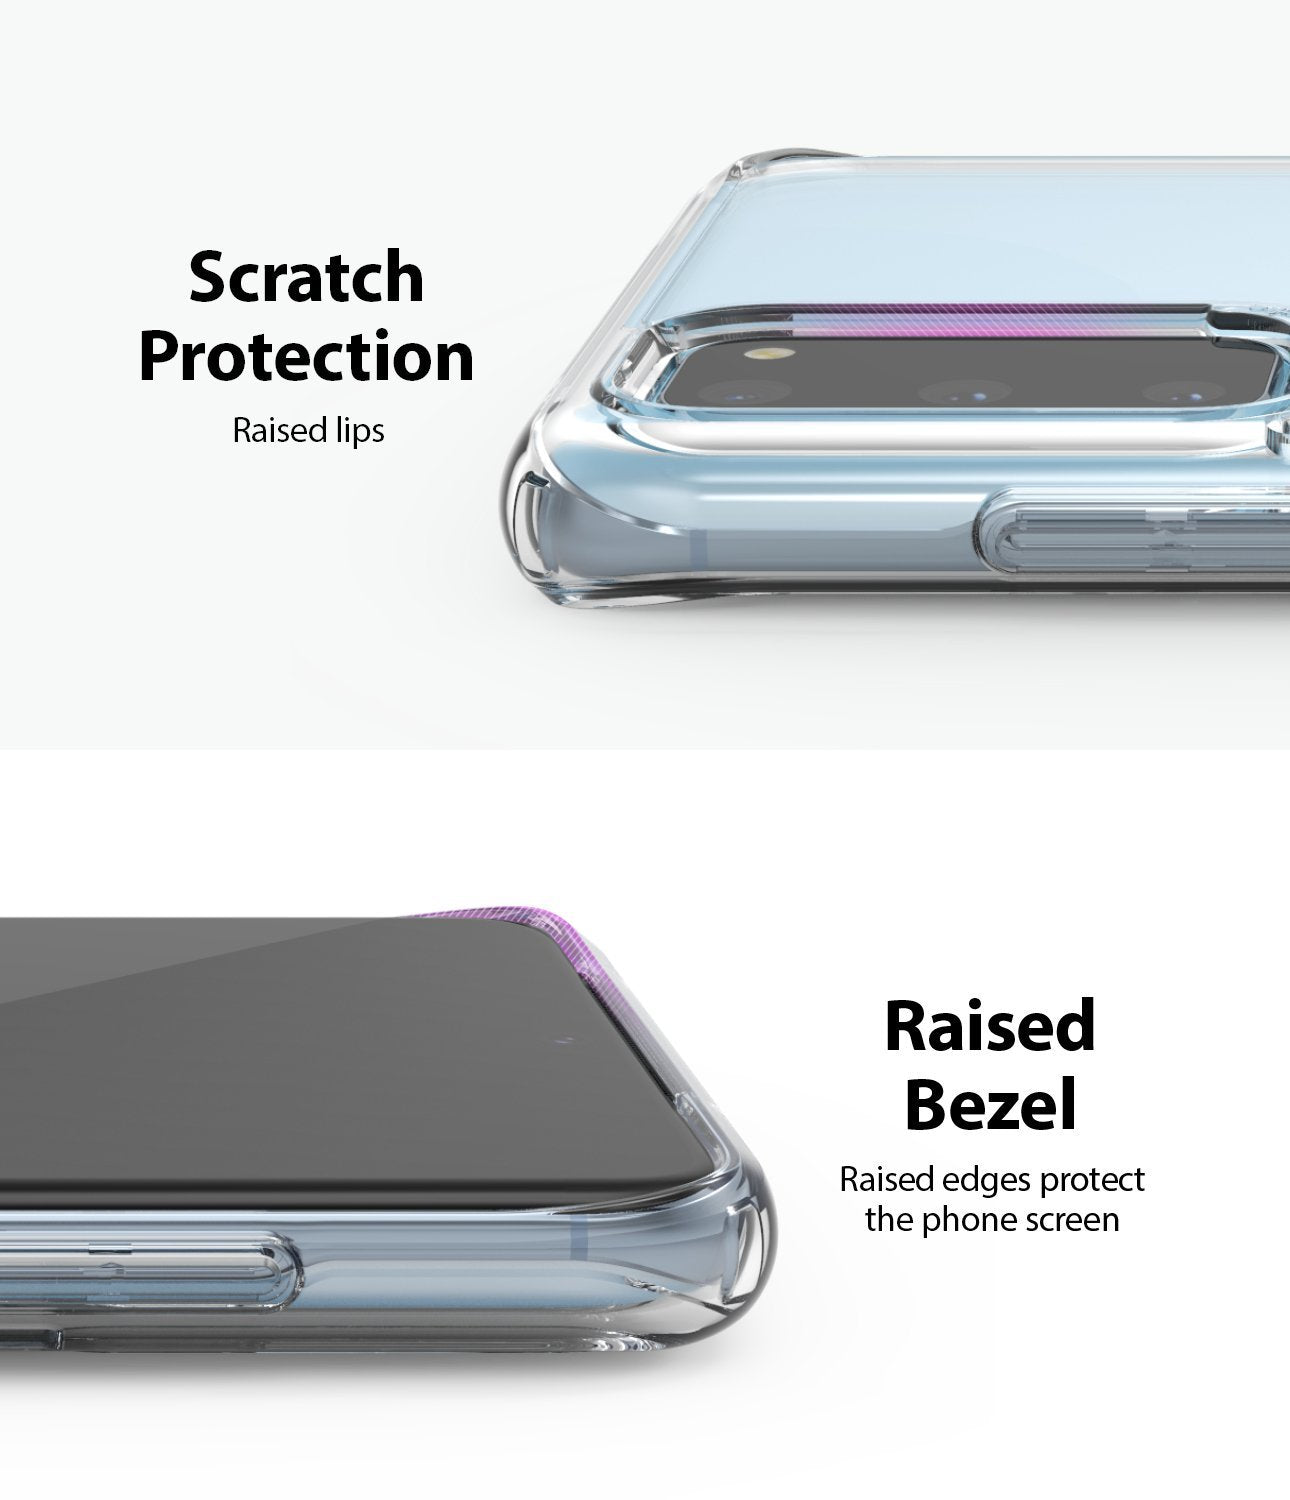 Ringke Fusion Galaxy S20 / S20 Plus / S20 Ultra Transparent Anti-Scratch Case